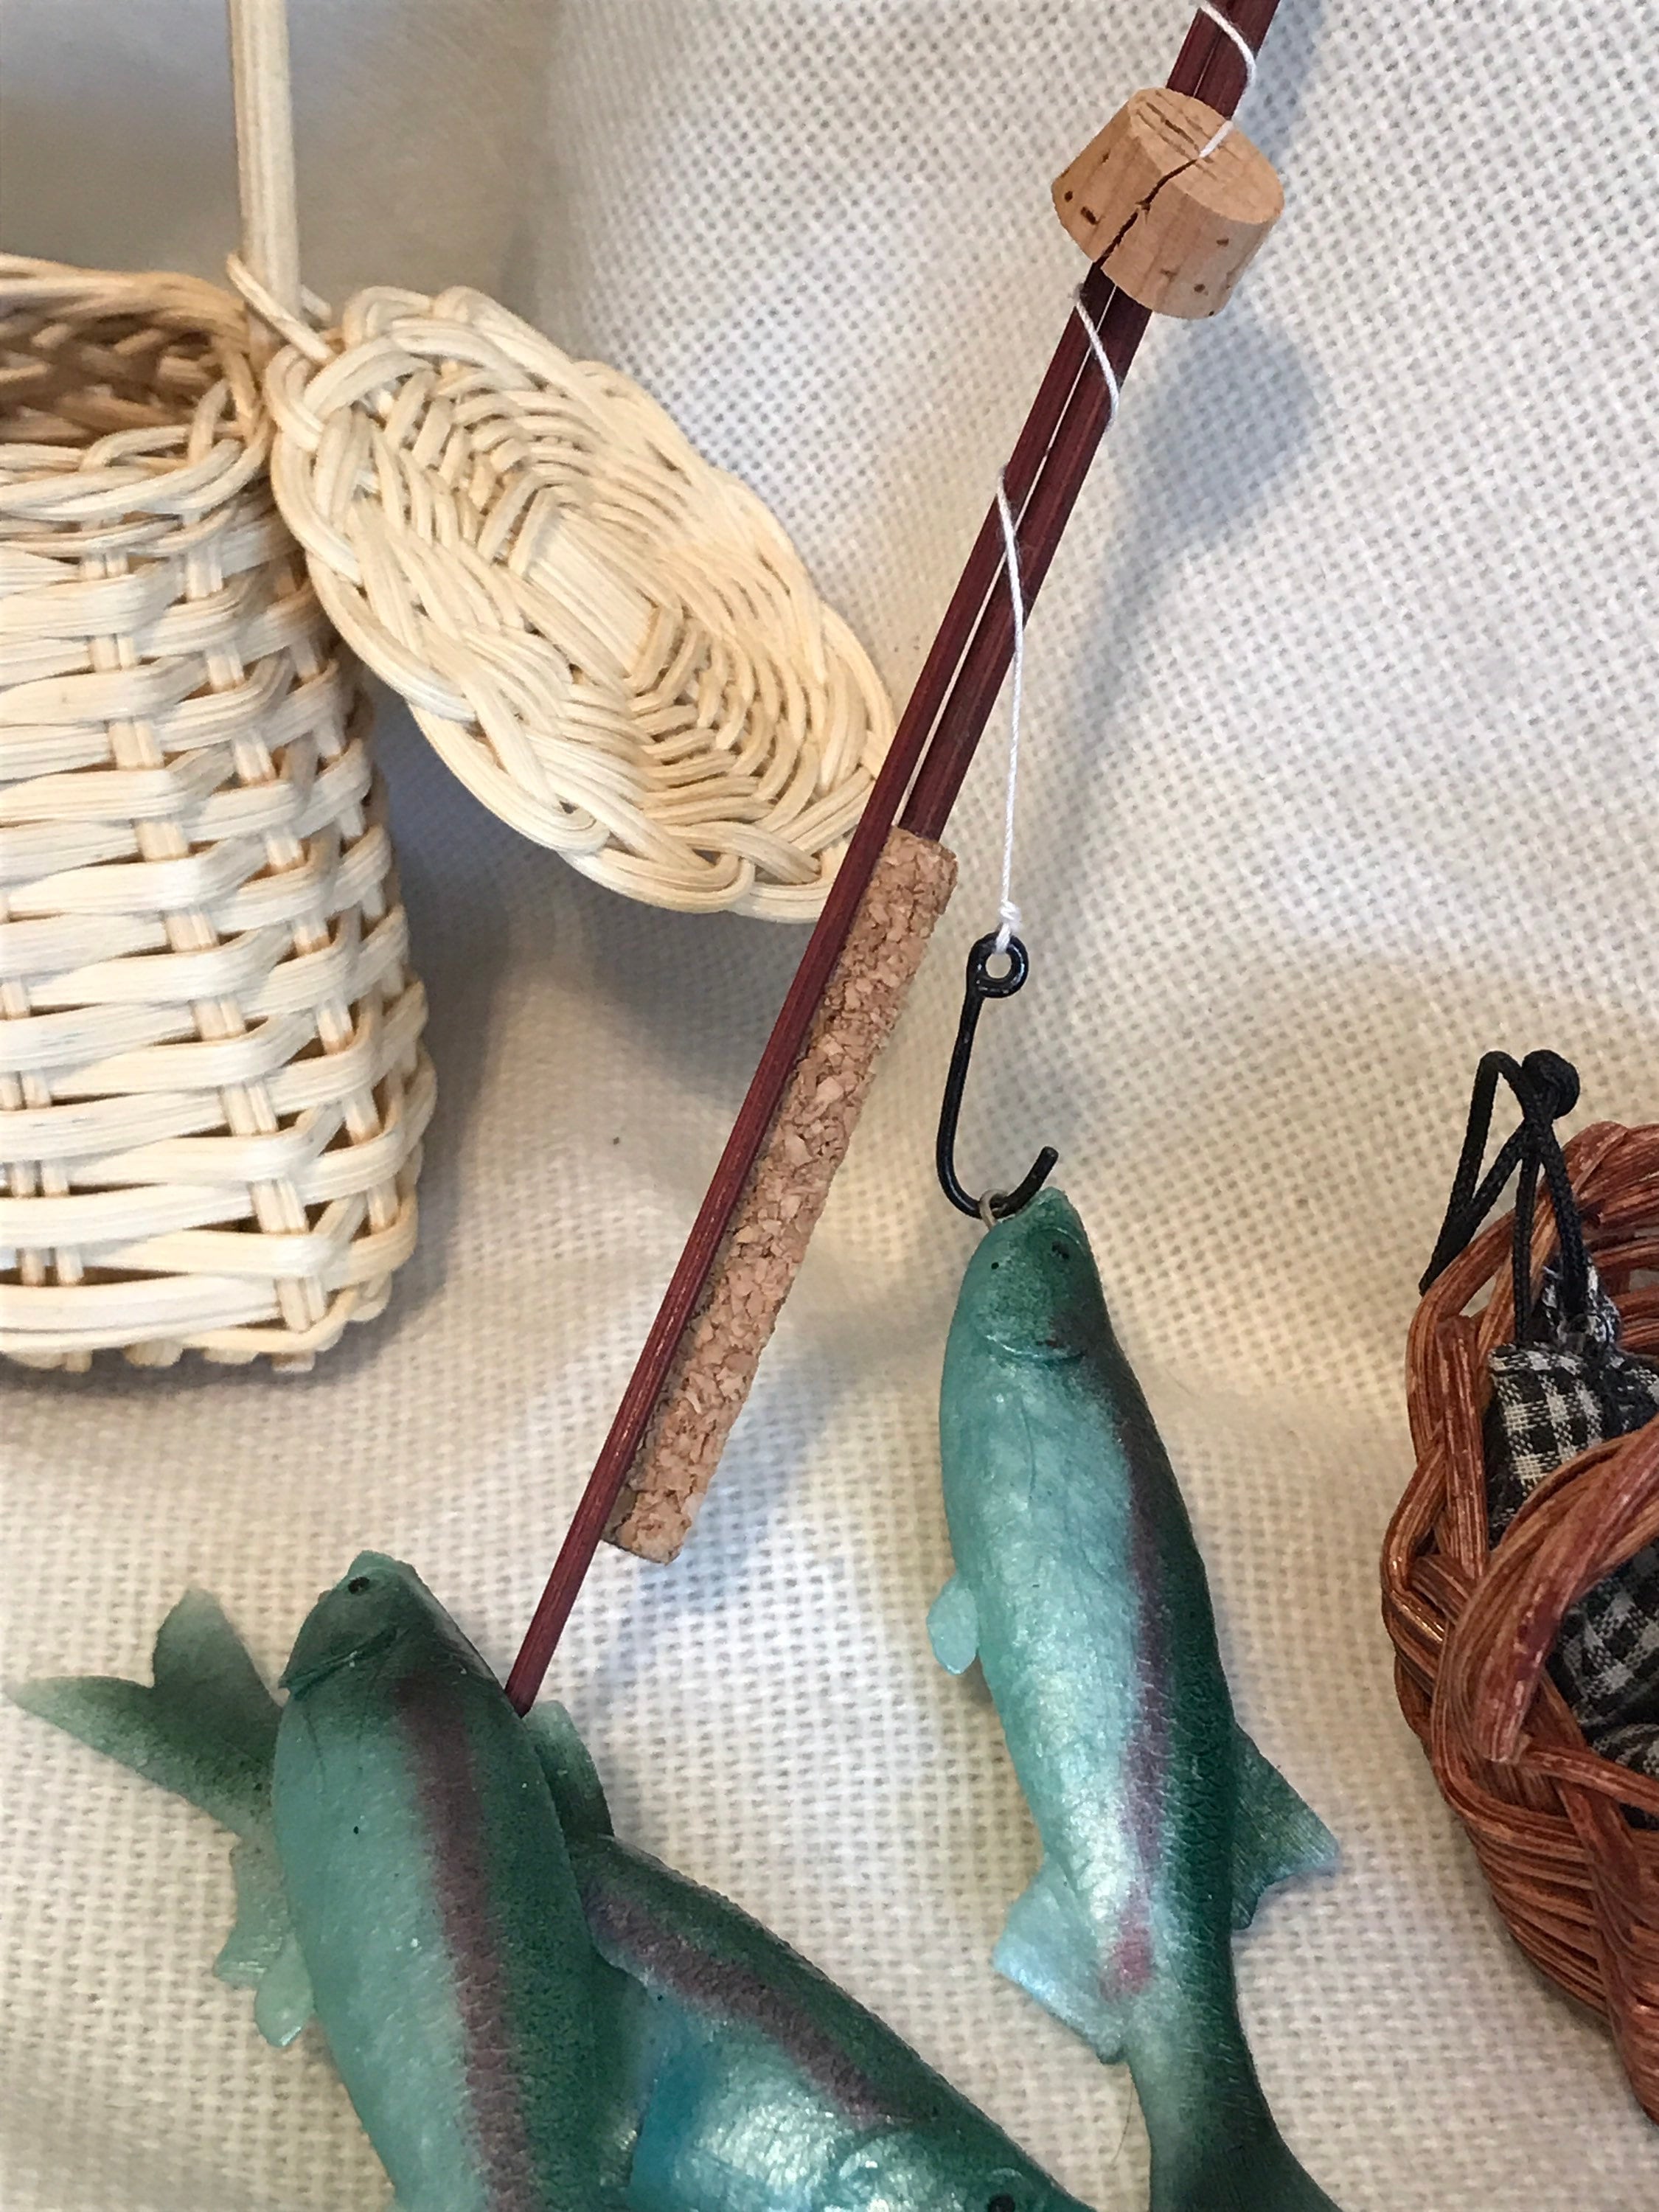 American Girl Fishing Pole and Fish - Nanea's Island Fishing Set